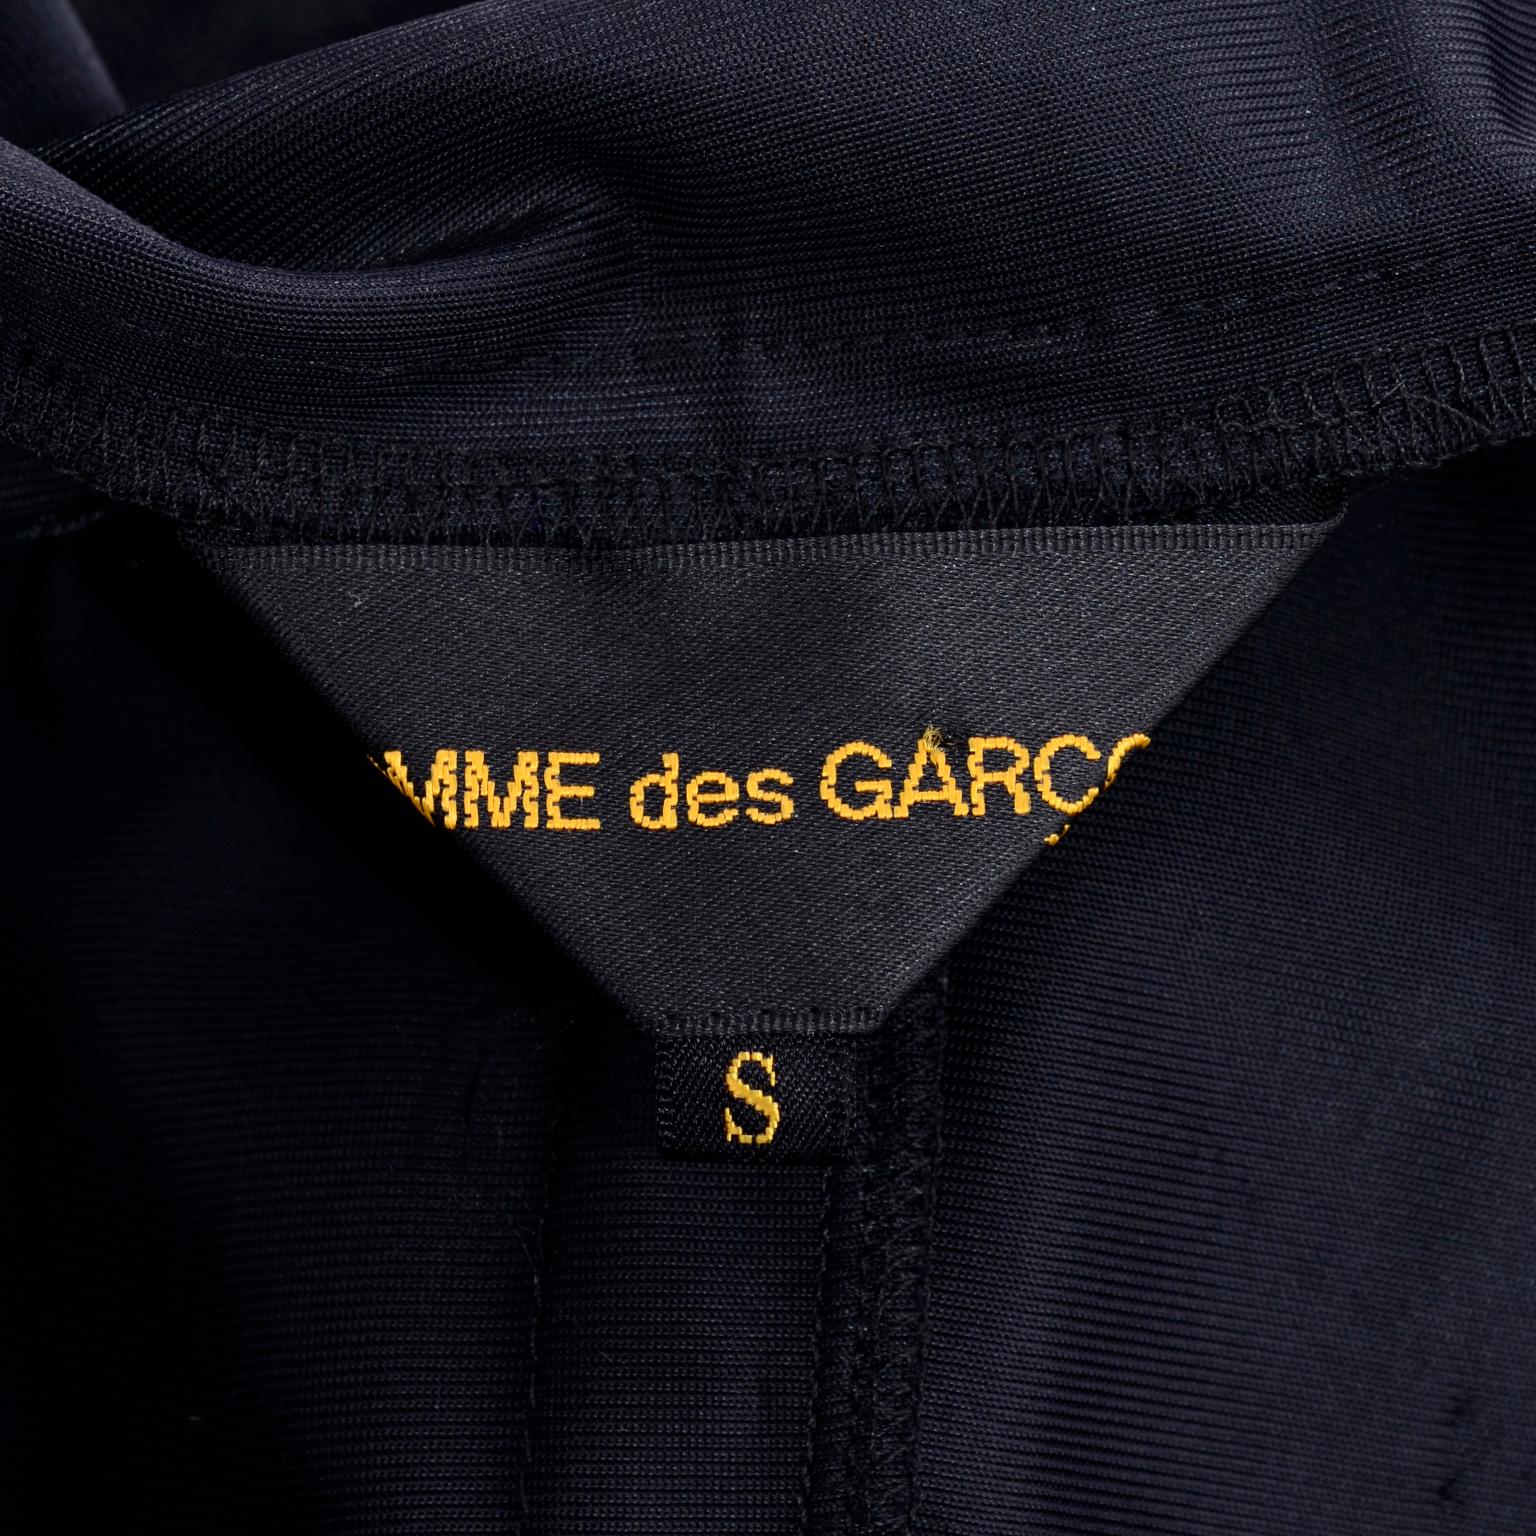 Black Wool Comme des Garcons Vest / Gilet Layered & Deconstructed w/ Raw Edges 5